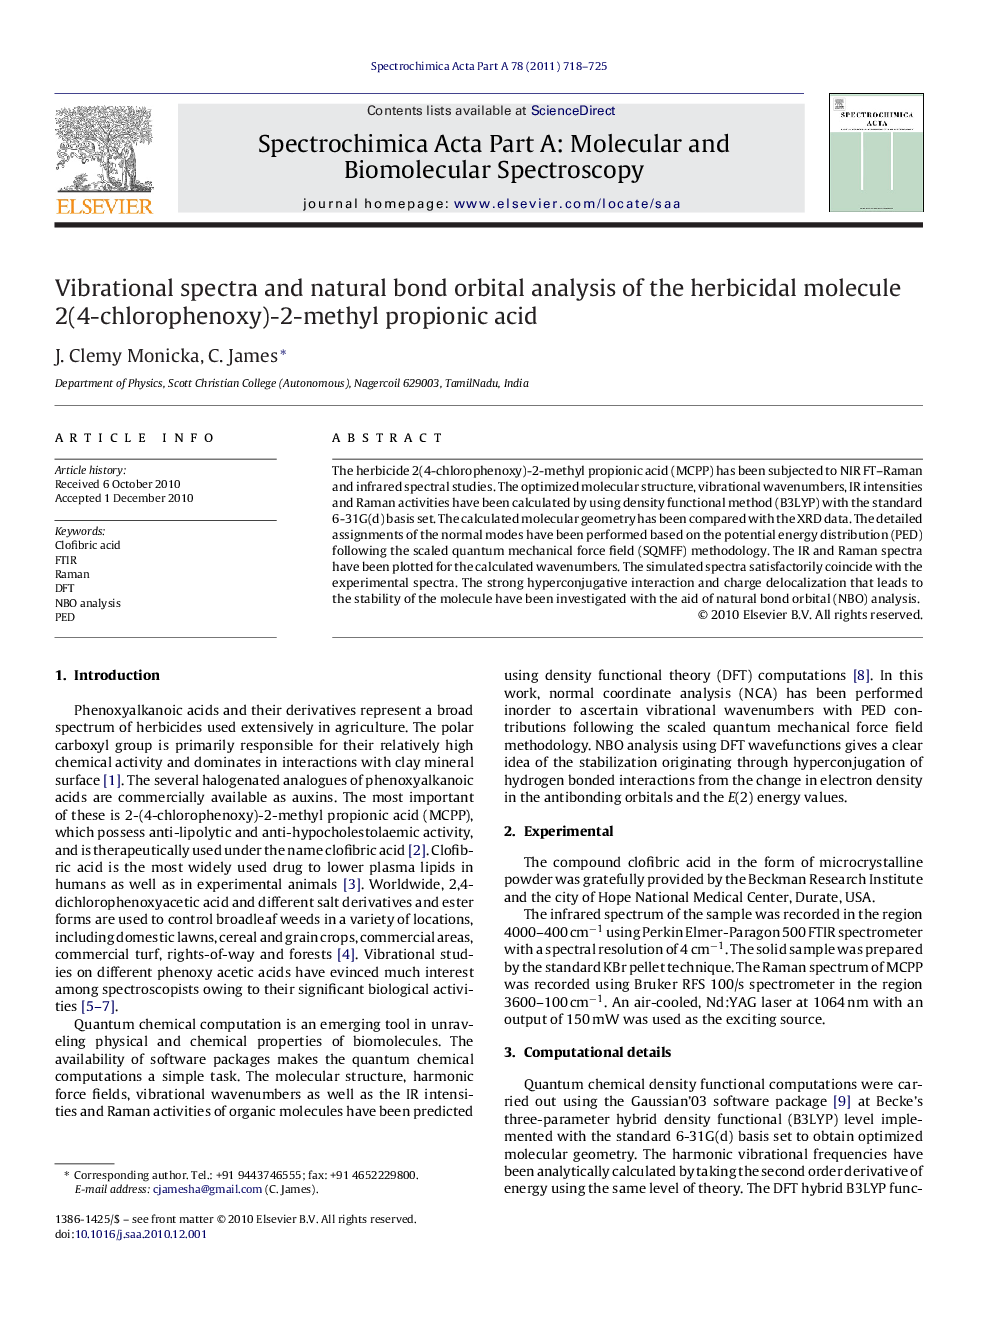 Vibrational spectra and natural bond orbital analysis of the herbicidal molecule 2(4-chlorophenoxy)-2-methyl propionic acid